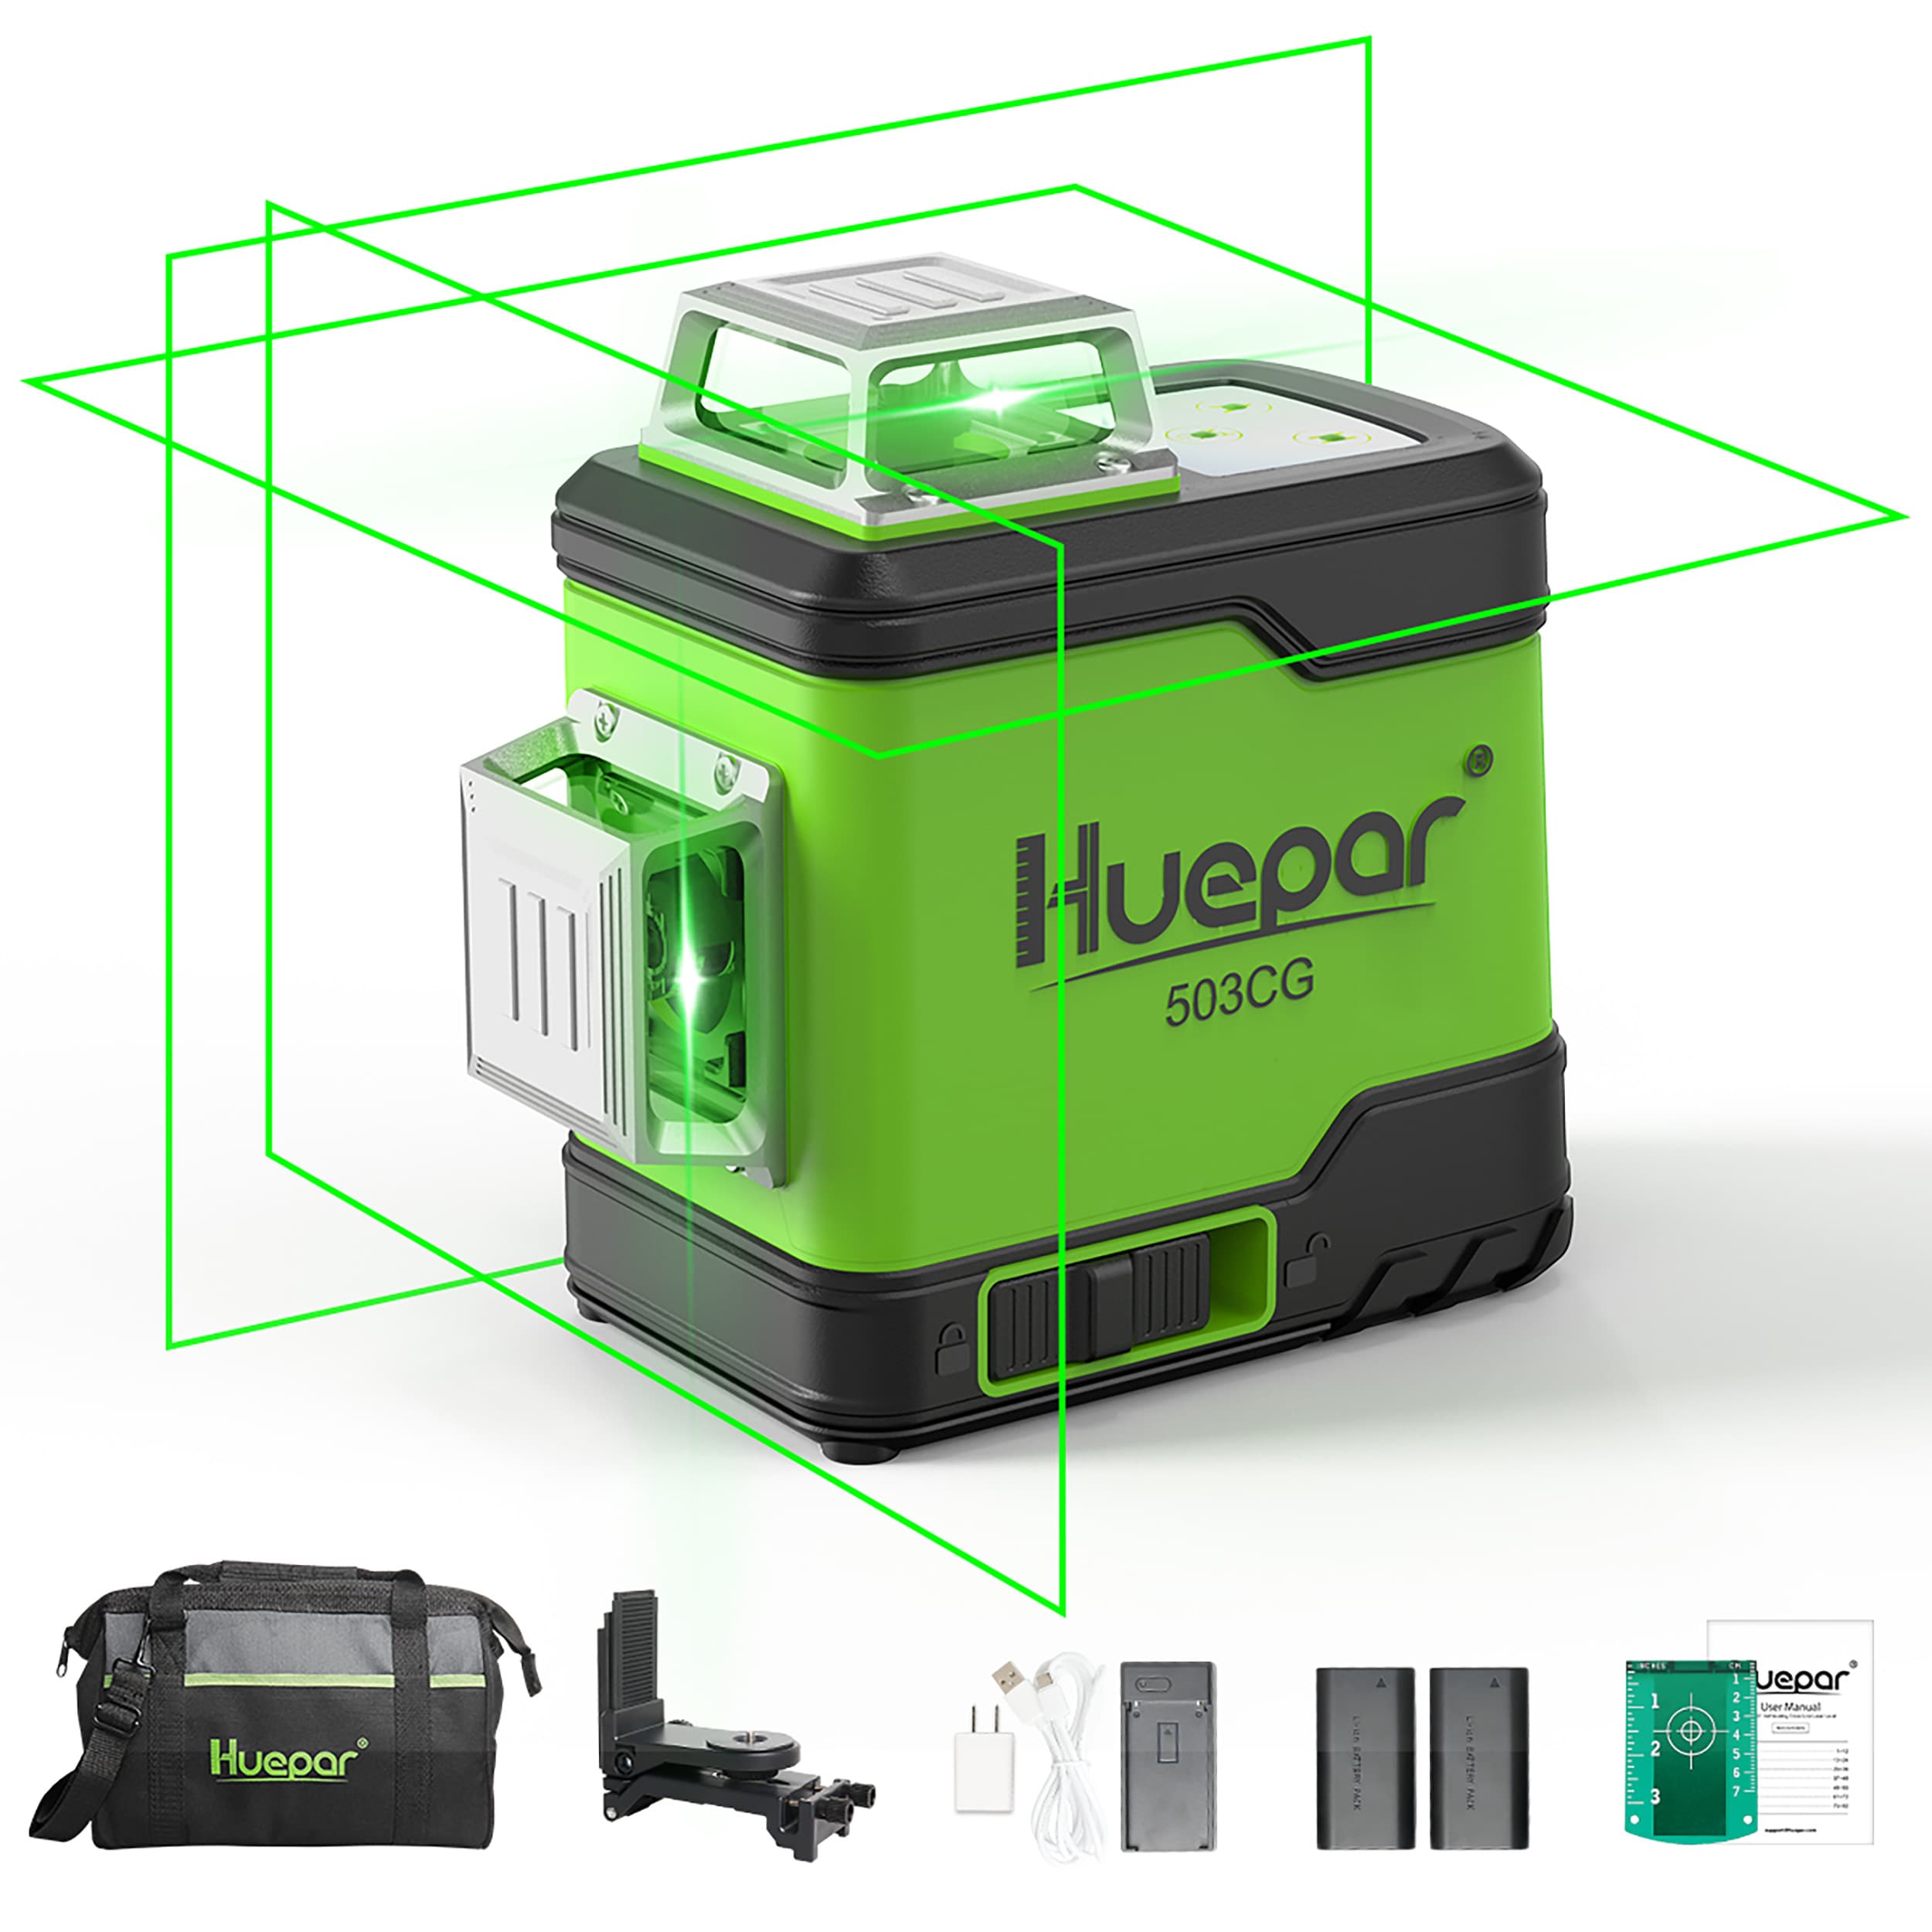 Huepar Green 200-ft Self-Leveling Indoor/Outdoor Cross-line Laser Level  with 360 Beam in the Laser Levels department at